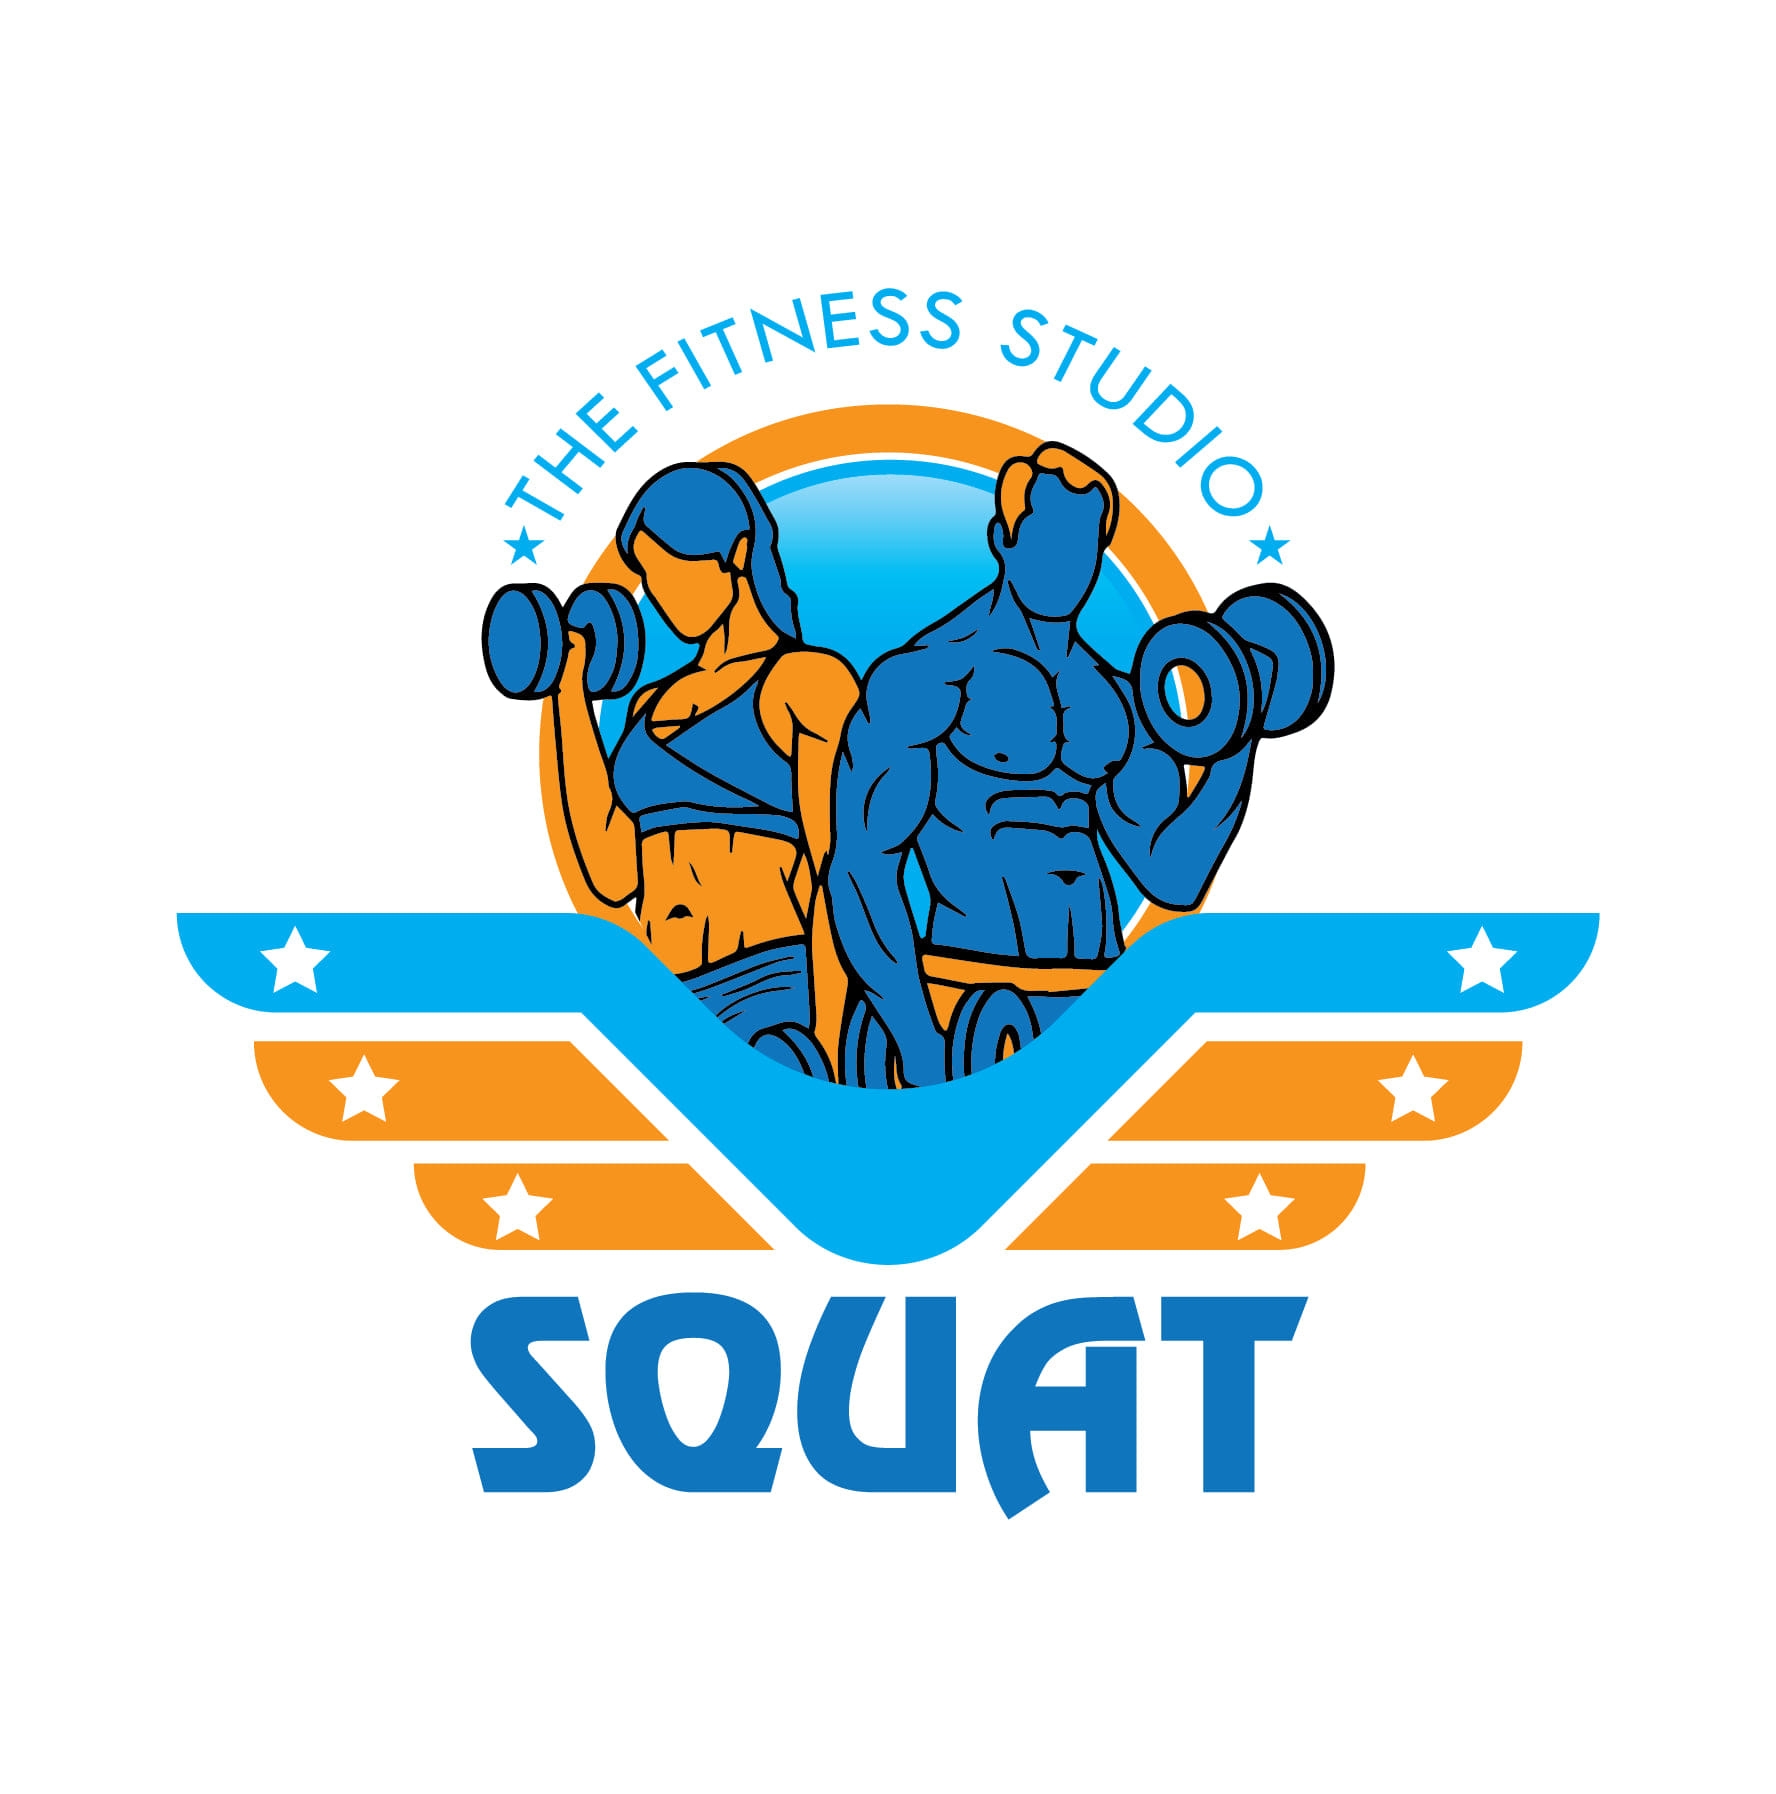 SQUAT - THE FITNESS STUDIO - Logo